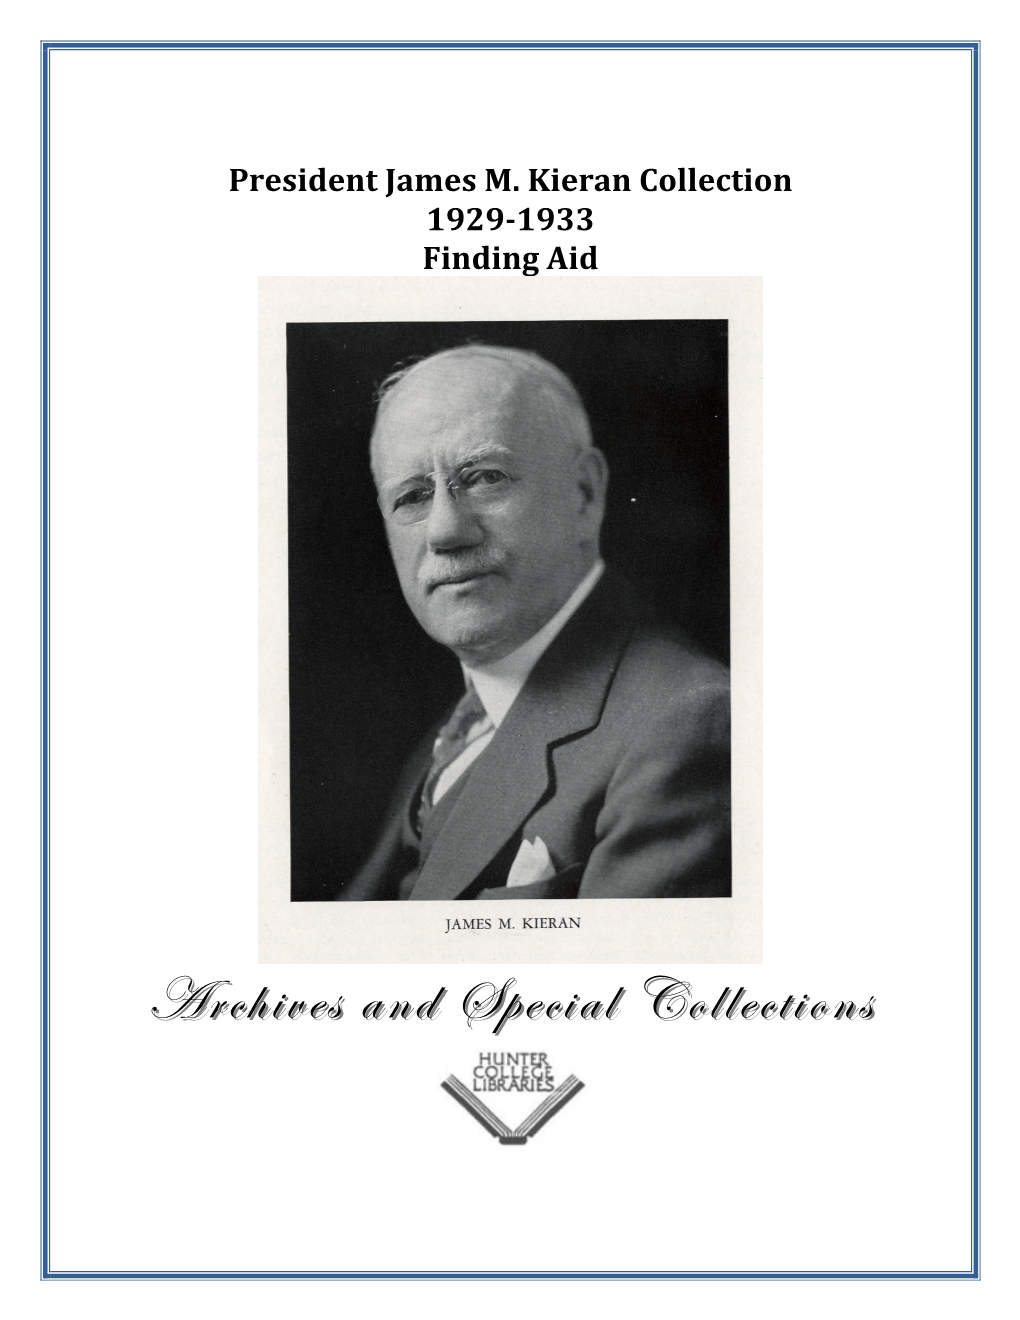 President James M. Kieran Collection, 1929-1933